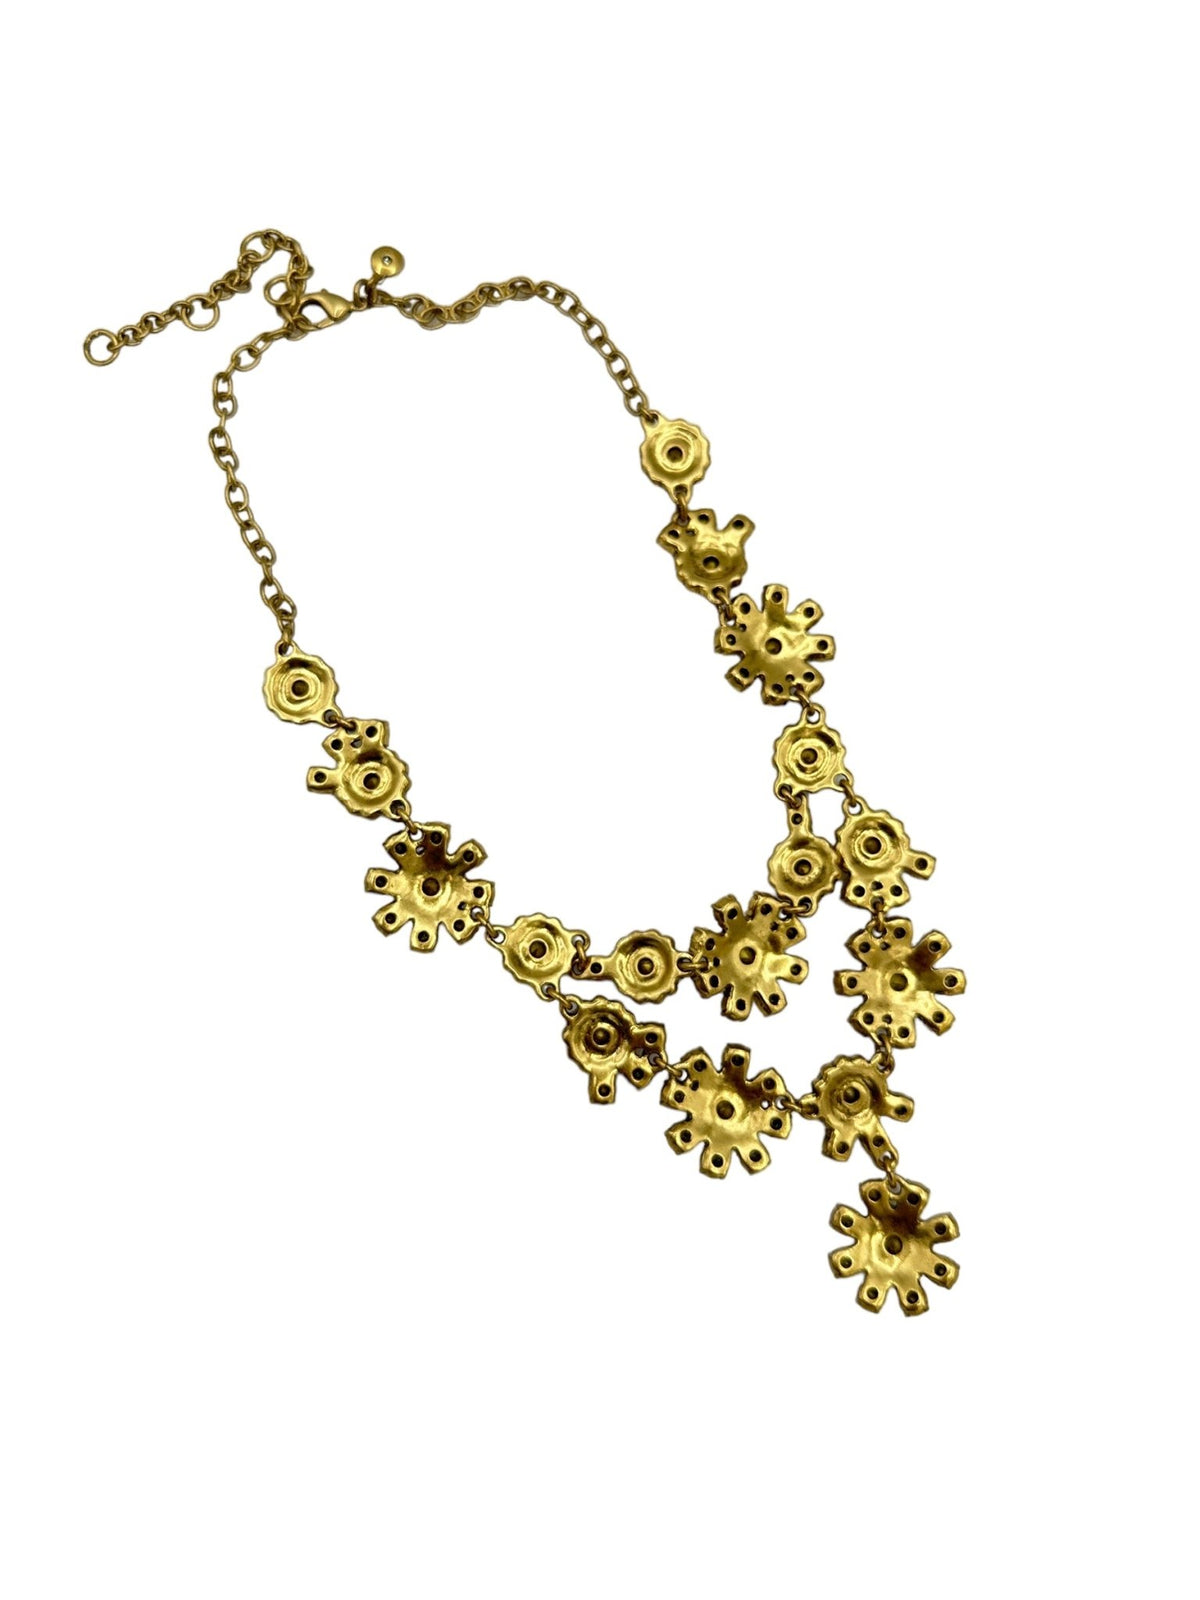 J. Crew Vintage Jewelry Layered Clear Rhinestone Floral Statement Bib Necklace - 24 Wishes Vintage Jewelry